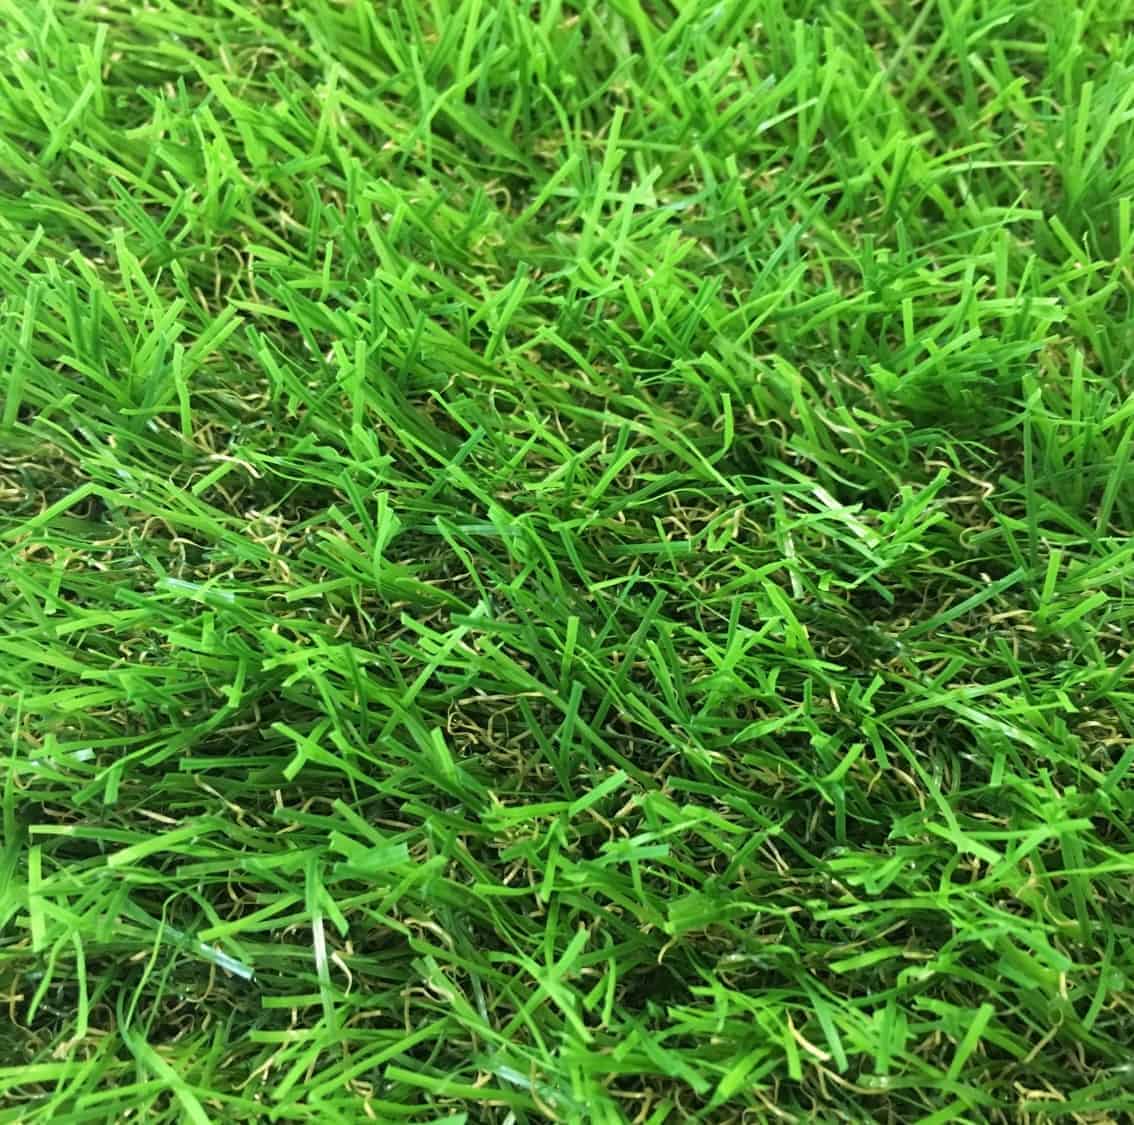 Cheap Artificial GrassOaks 30mmAstro Realistic Garden Turf Fake Lawn